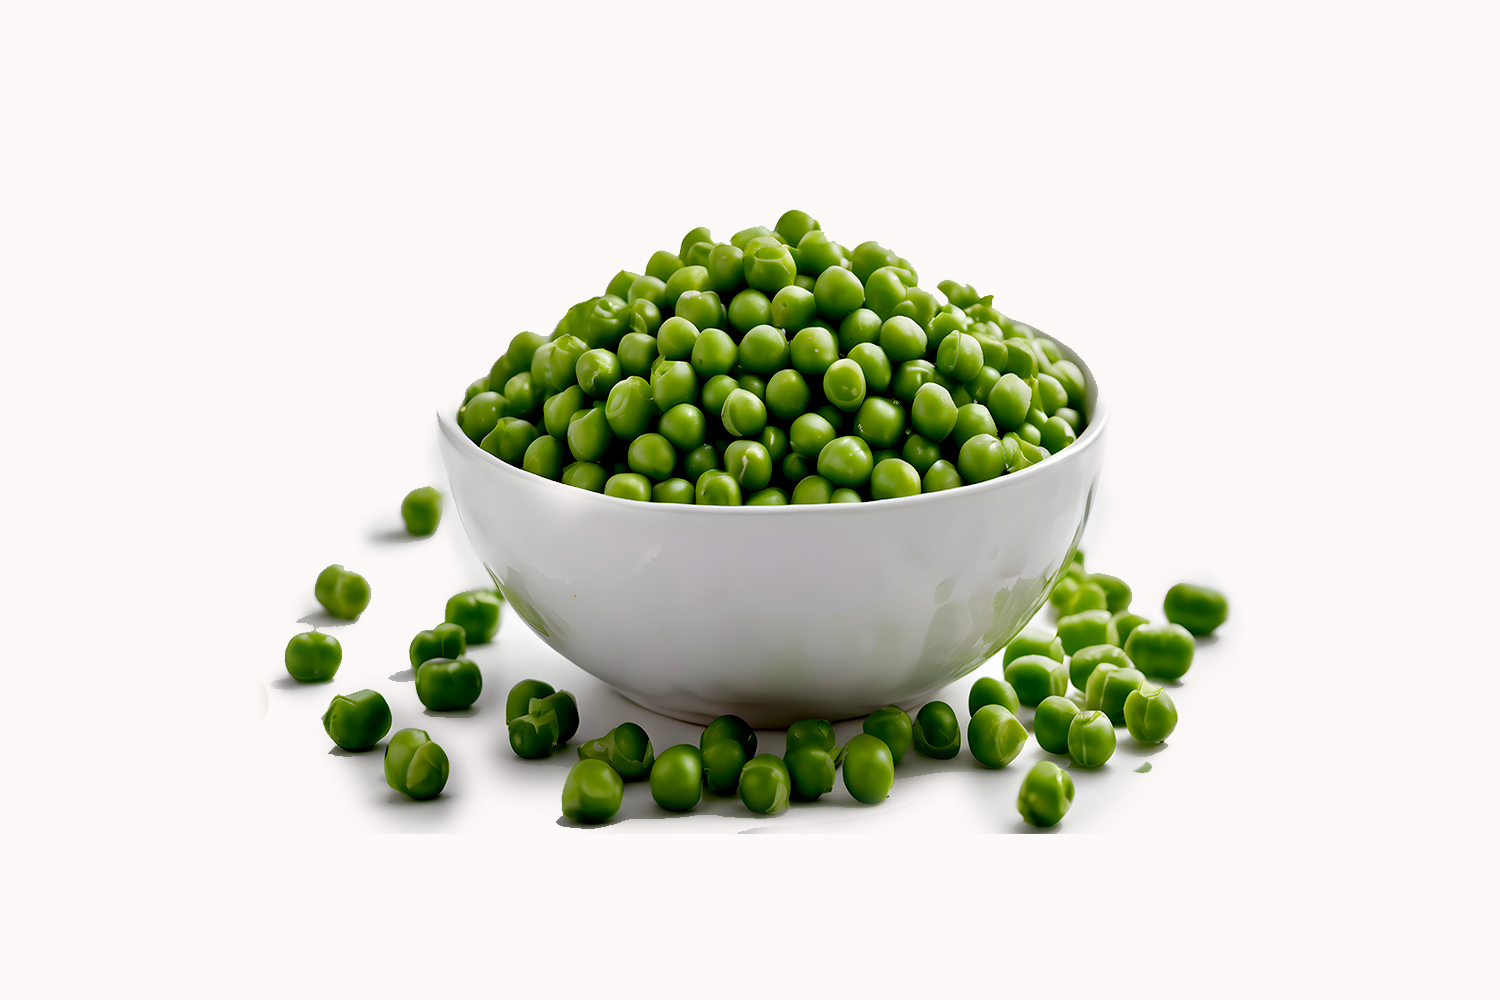 Peeled Green Peas